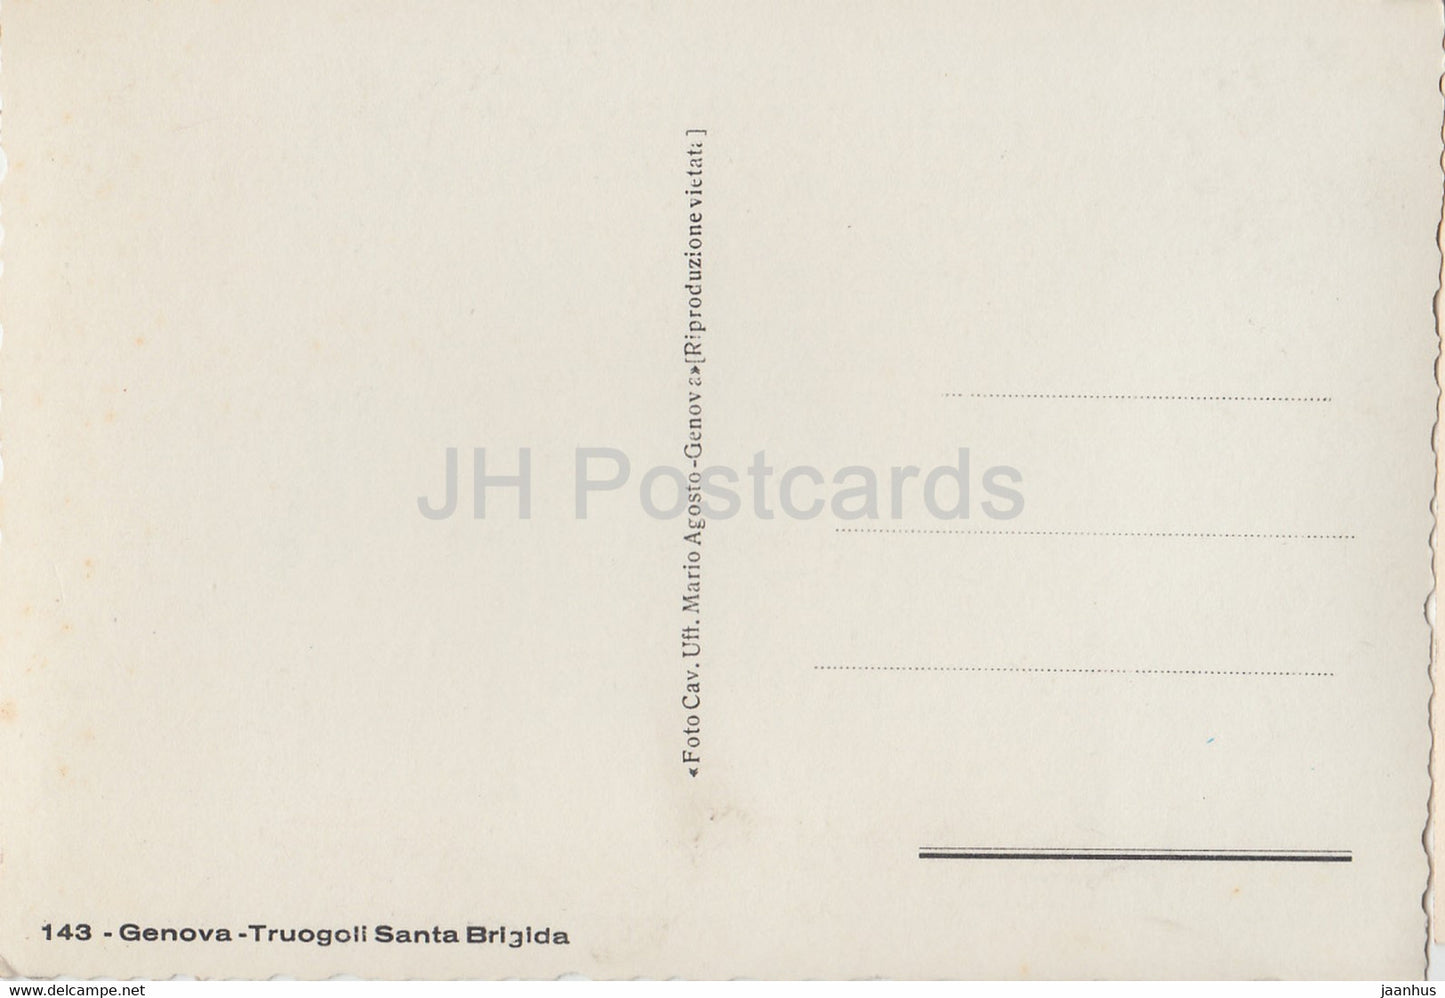 Genova - Genoa - Truogoli Santa Brigida - 143 - old postcard - Italy - unused